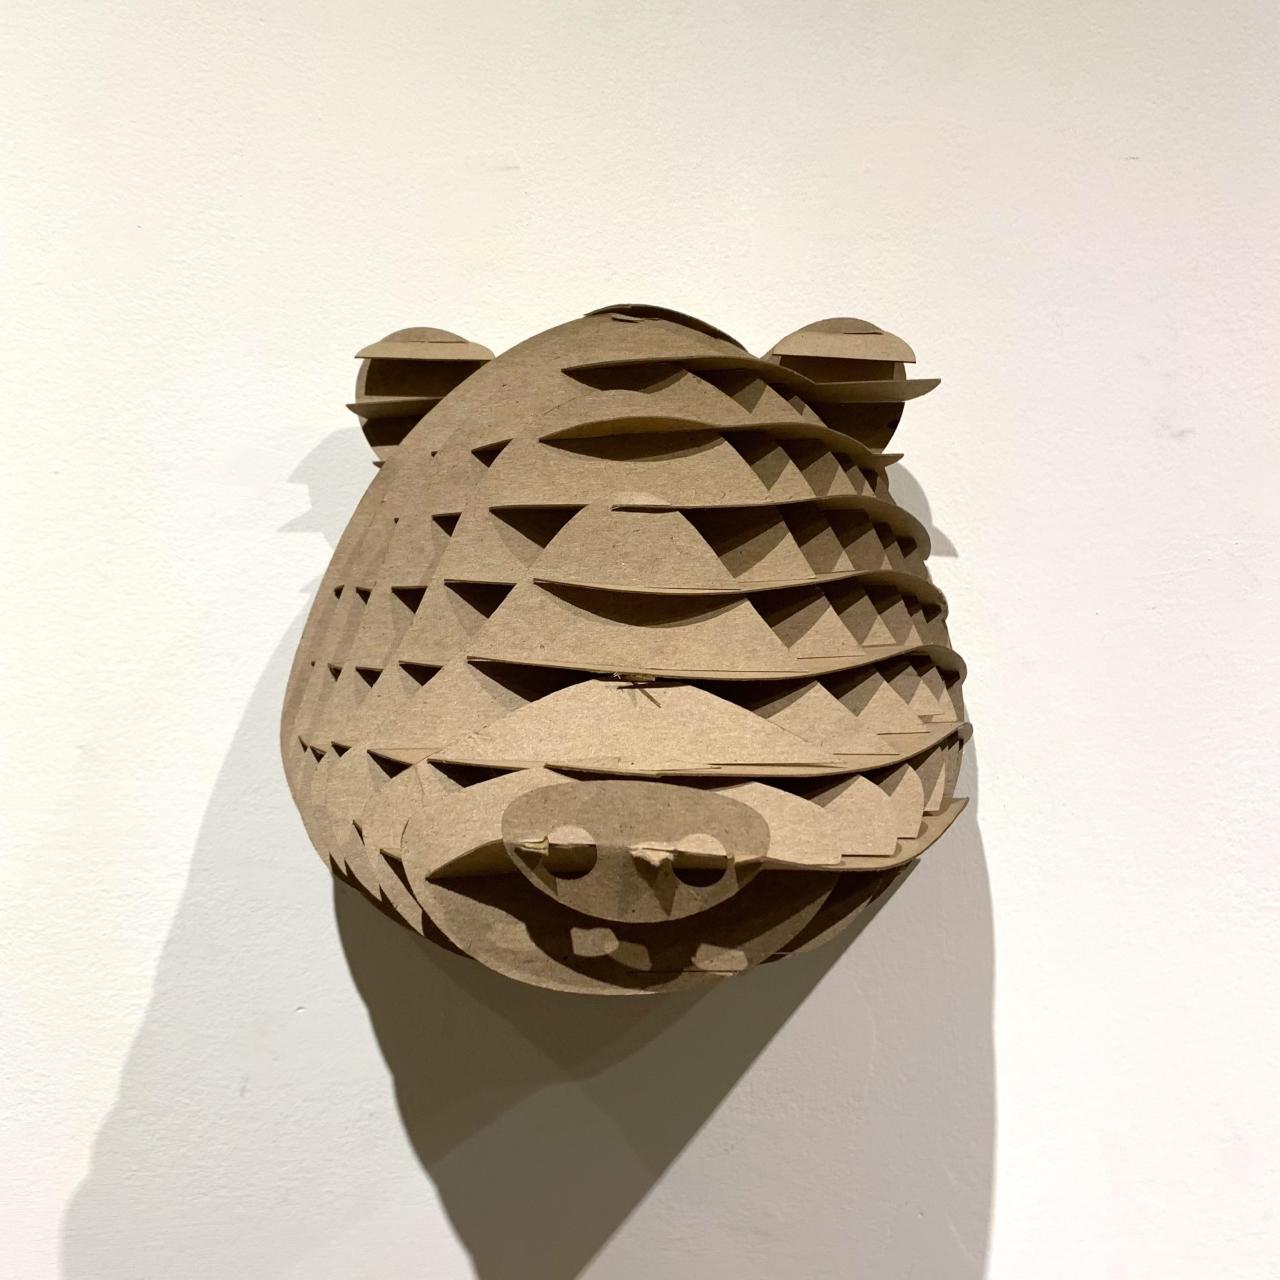 3D constructed model of a bear head.